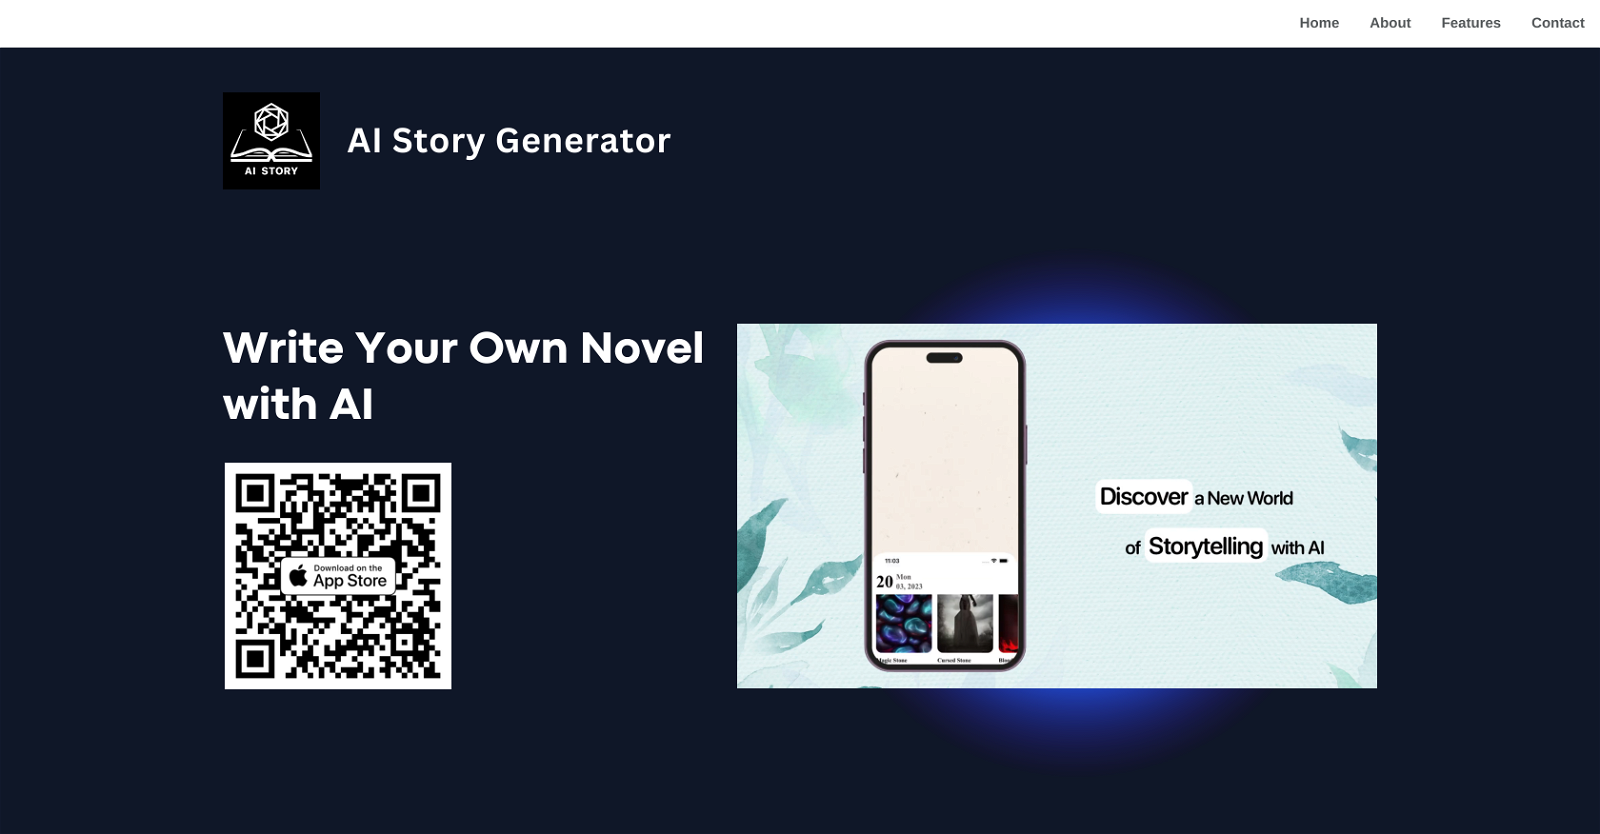 AppIntro's AI Story Generator website